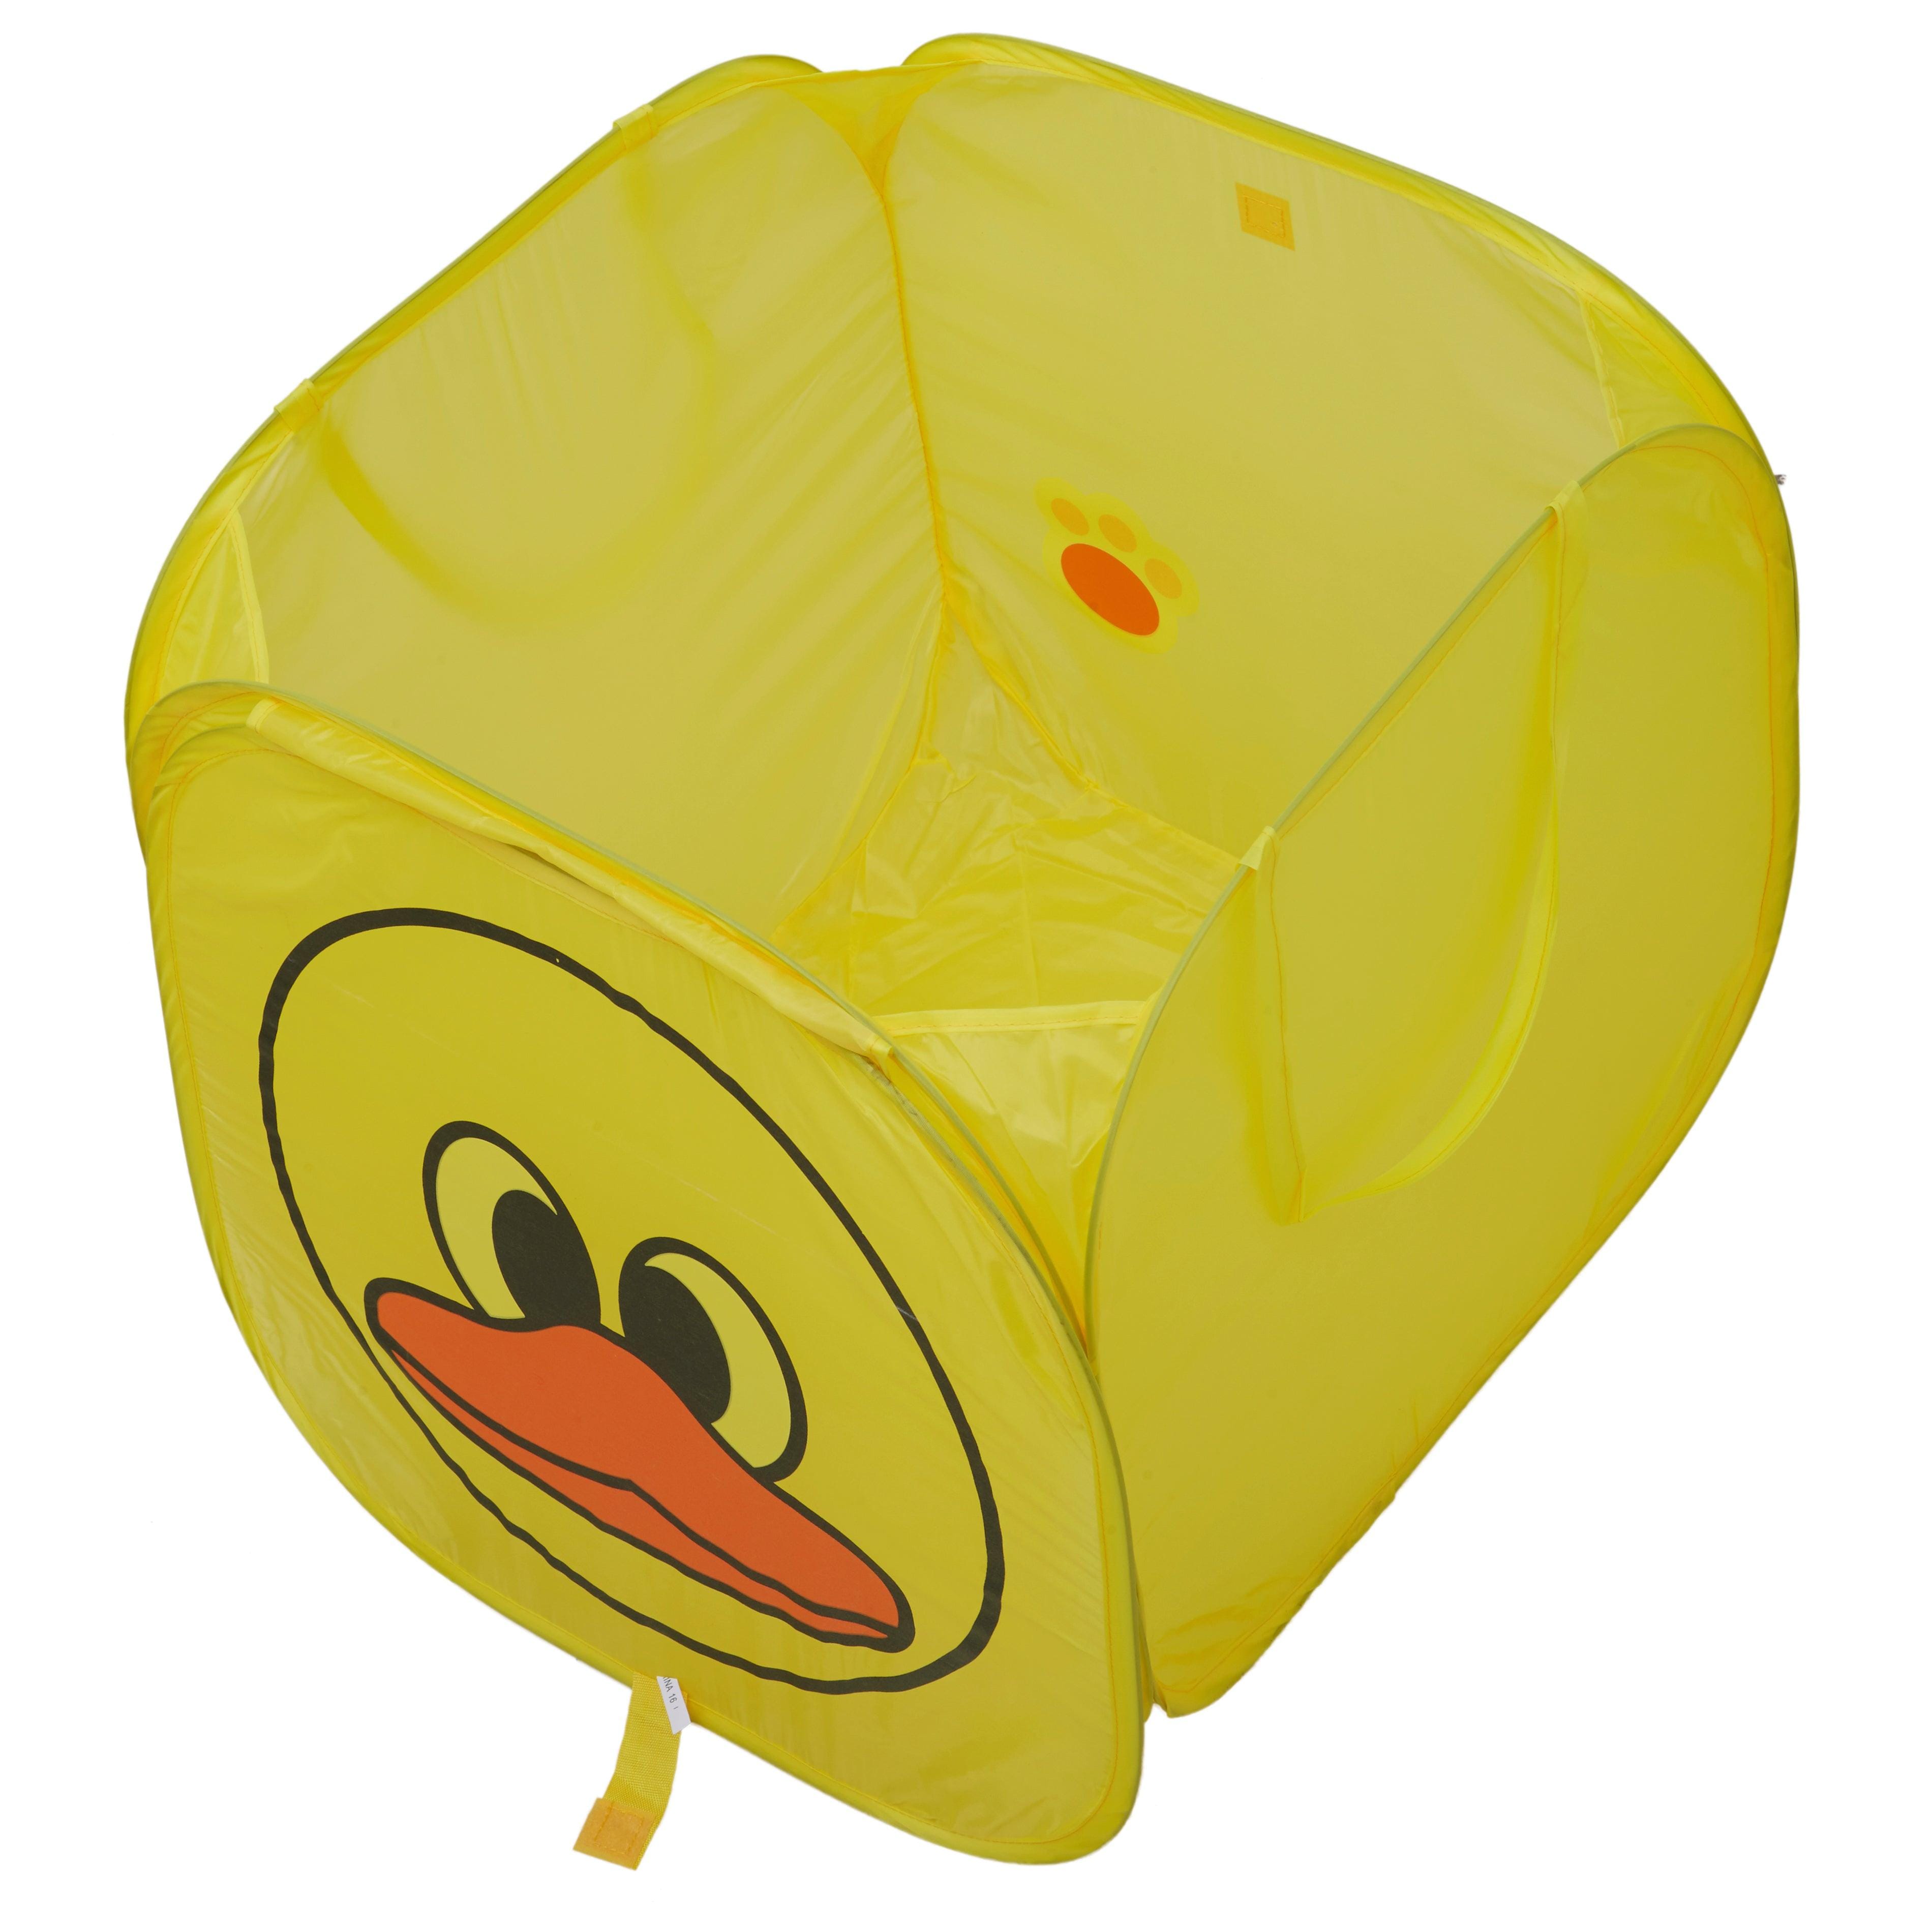 Kids Storage Cube - Yellow Duck